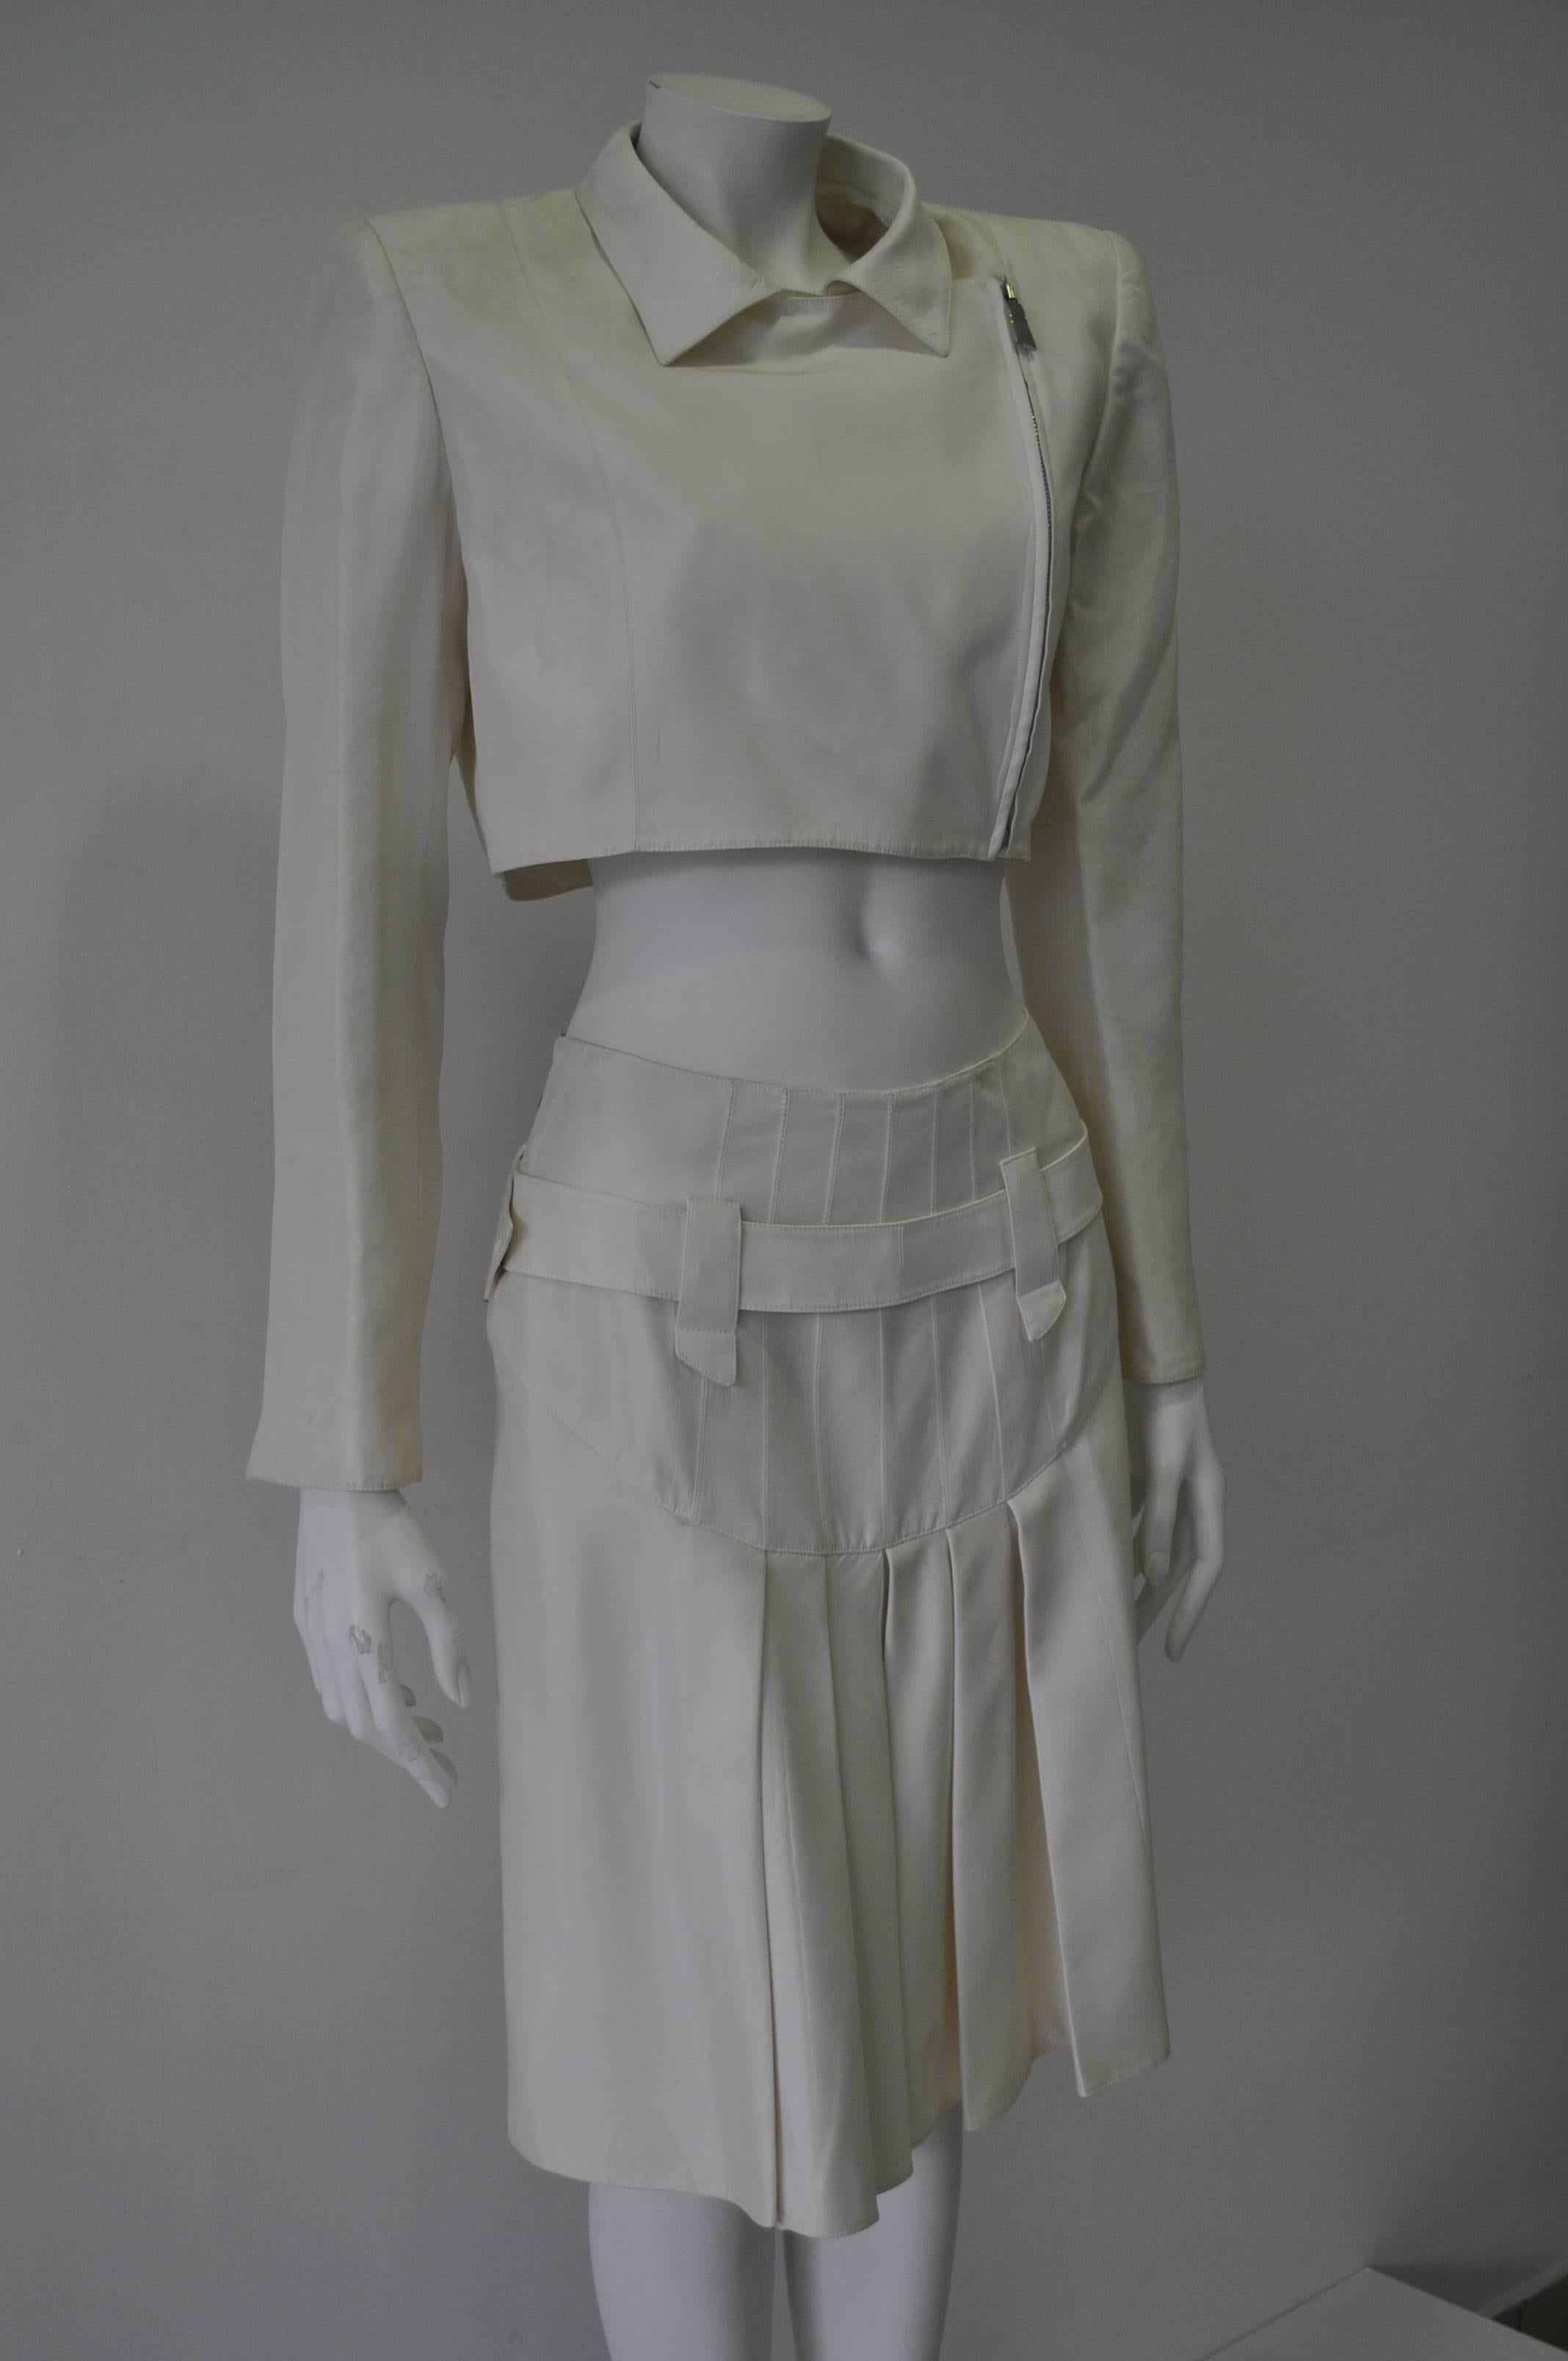 Very Rare Claude Montana Zip Space Age Inspired Bare Midriff Skirt Suit